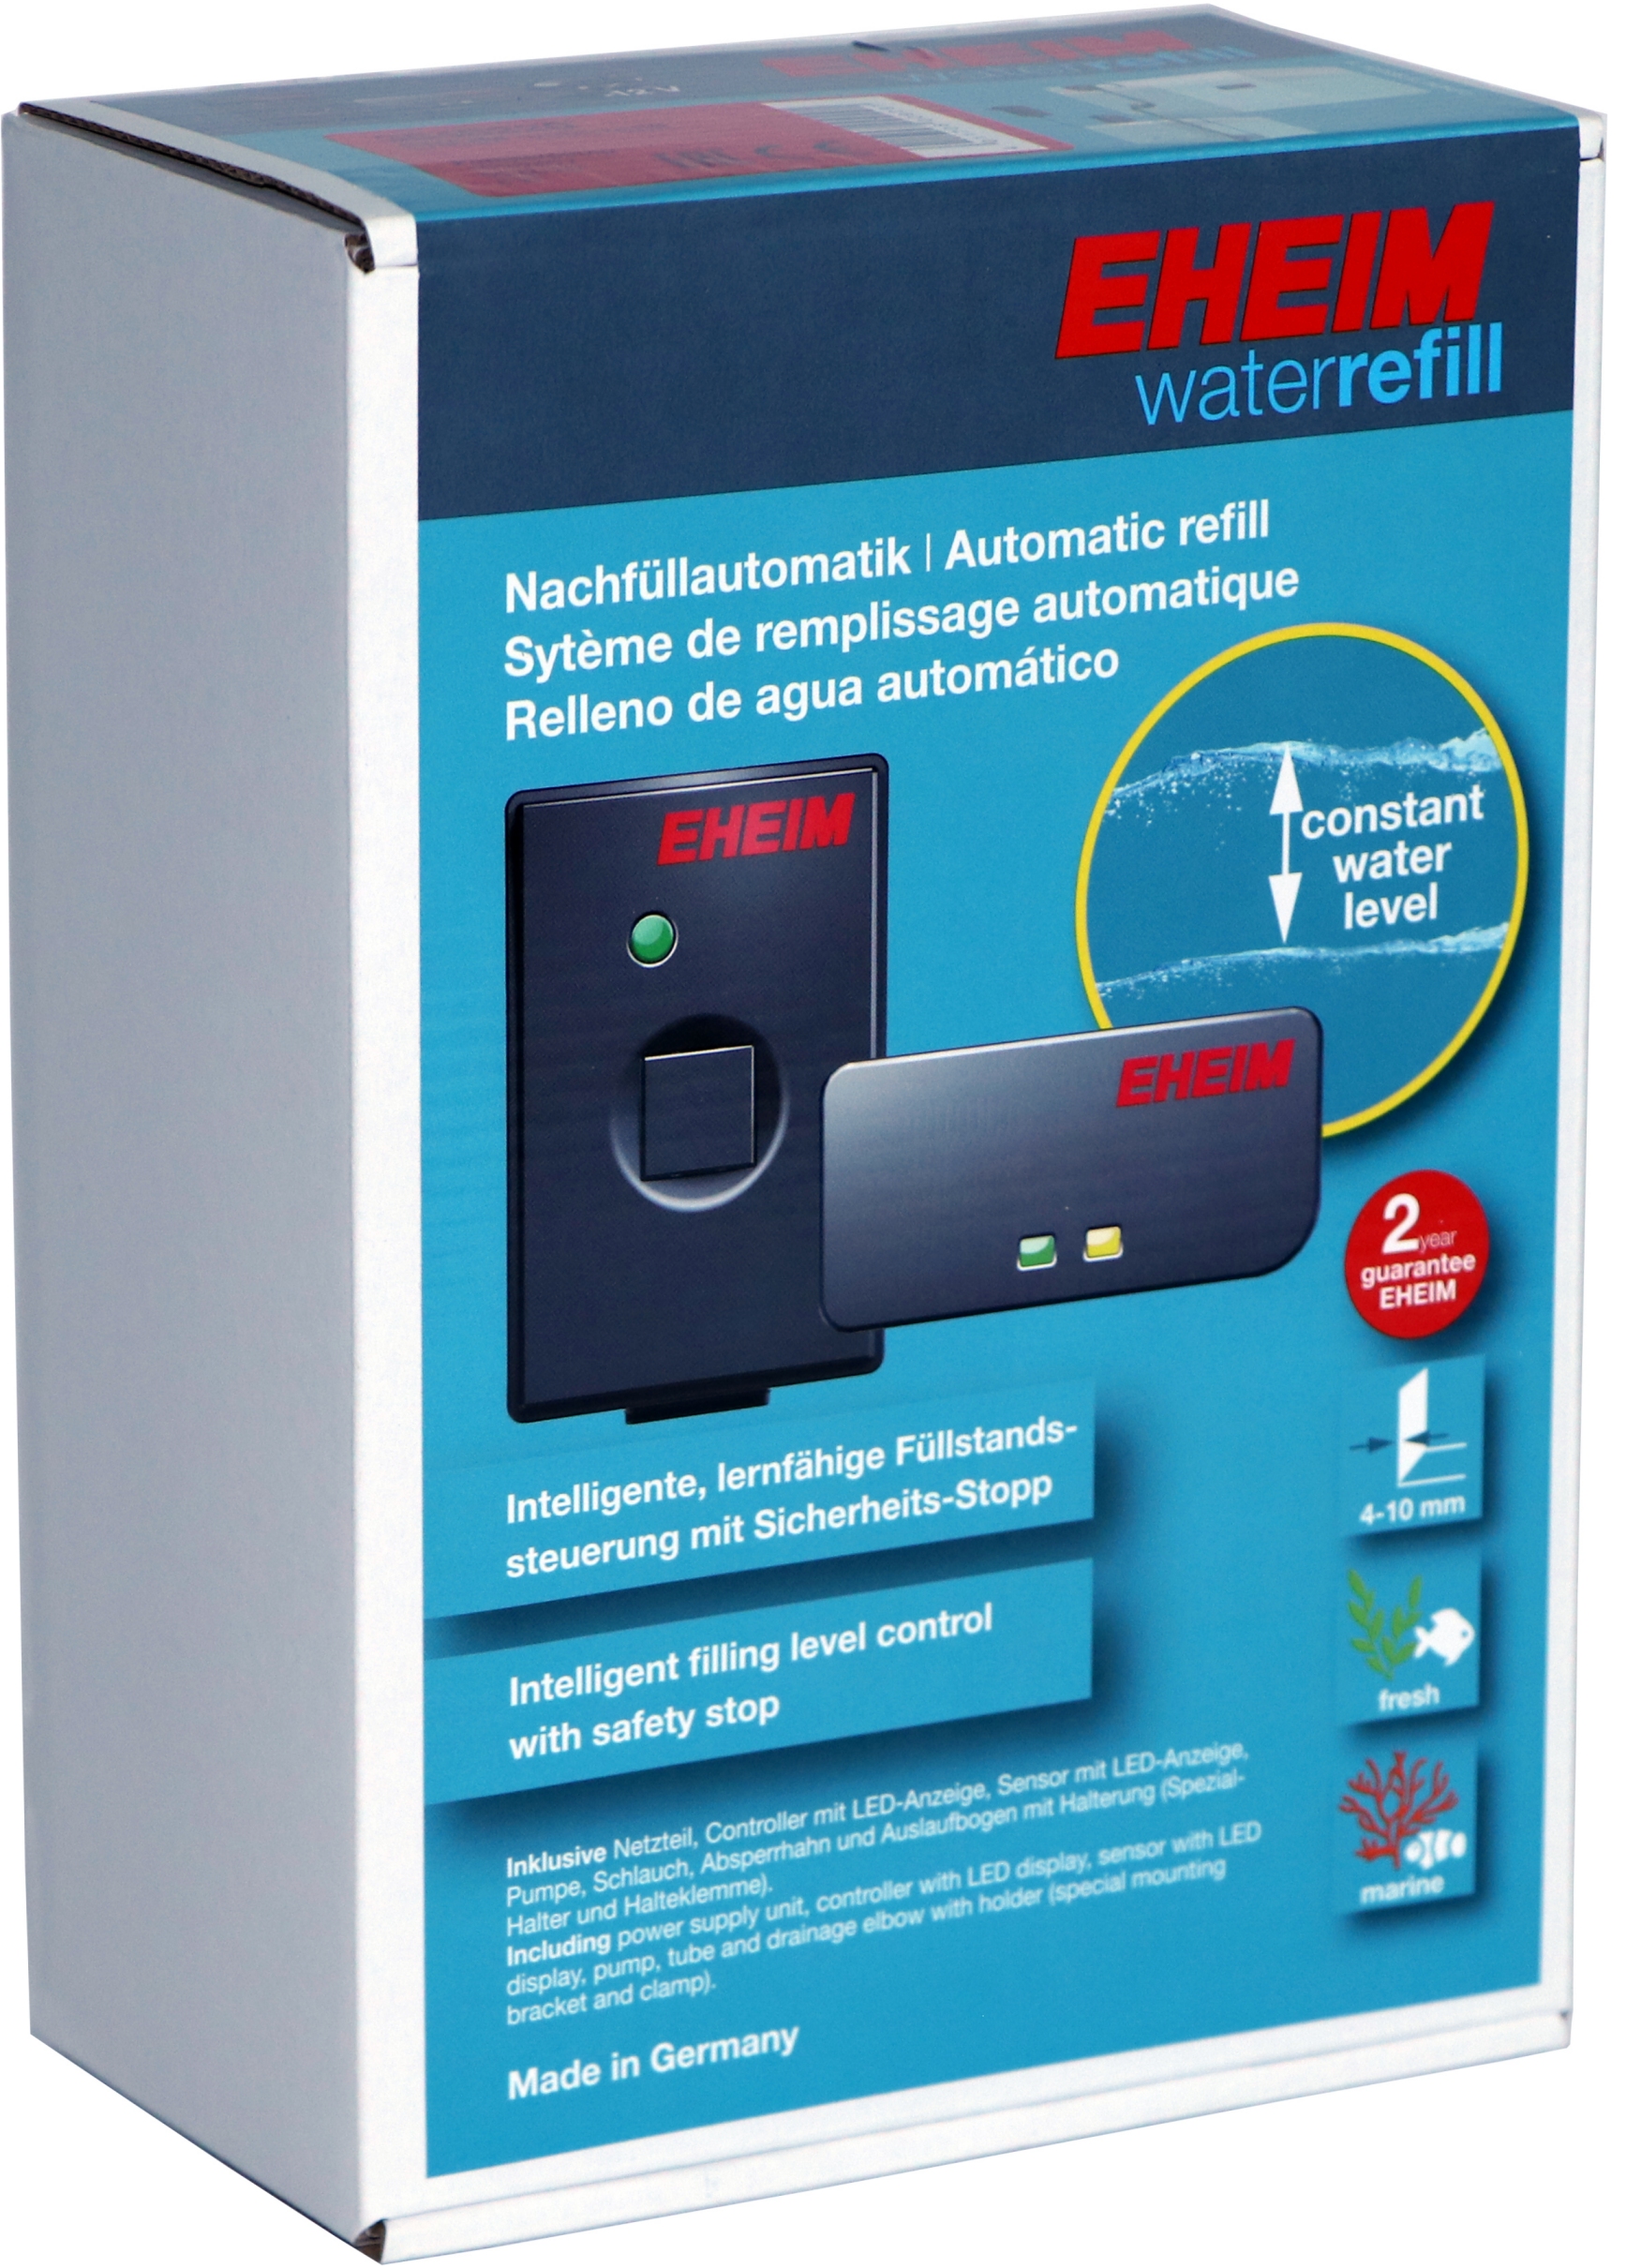 EHEIM waterrefill -water refill system